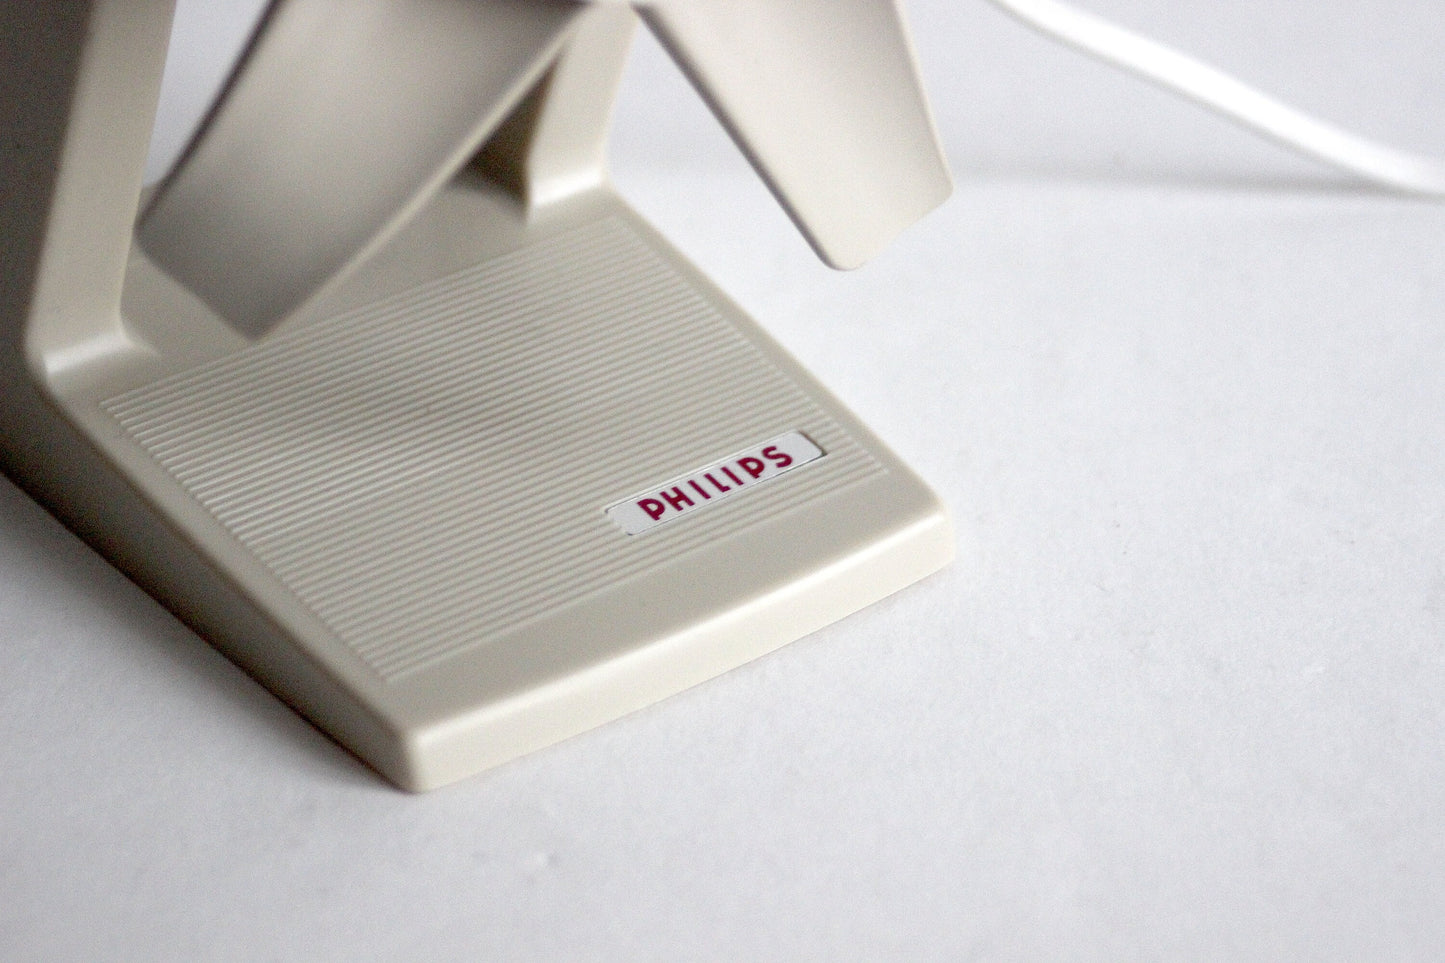 Philips HZ 5170 desk fan. Holland 1964. European Functionalist / Rationalist Design.